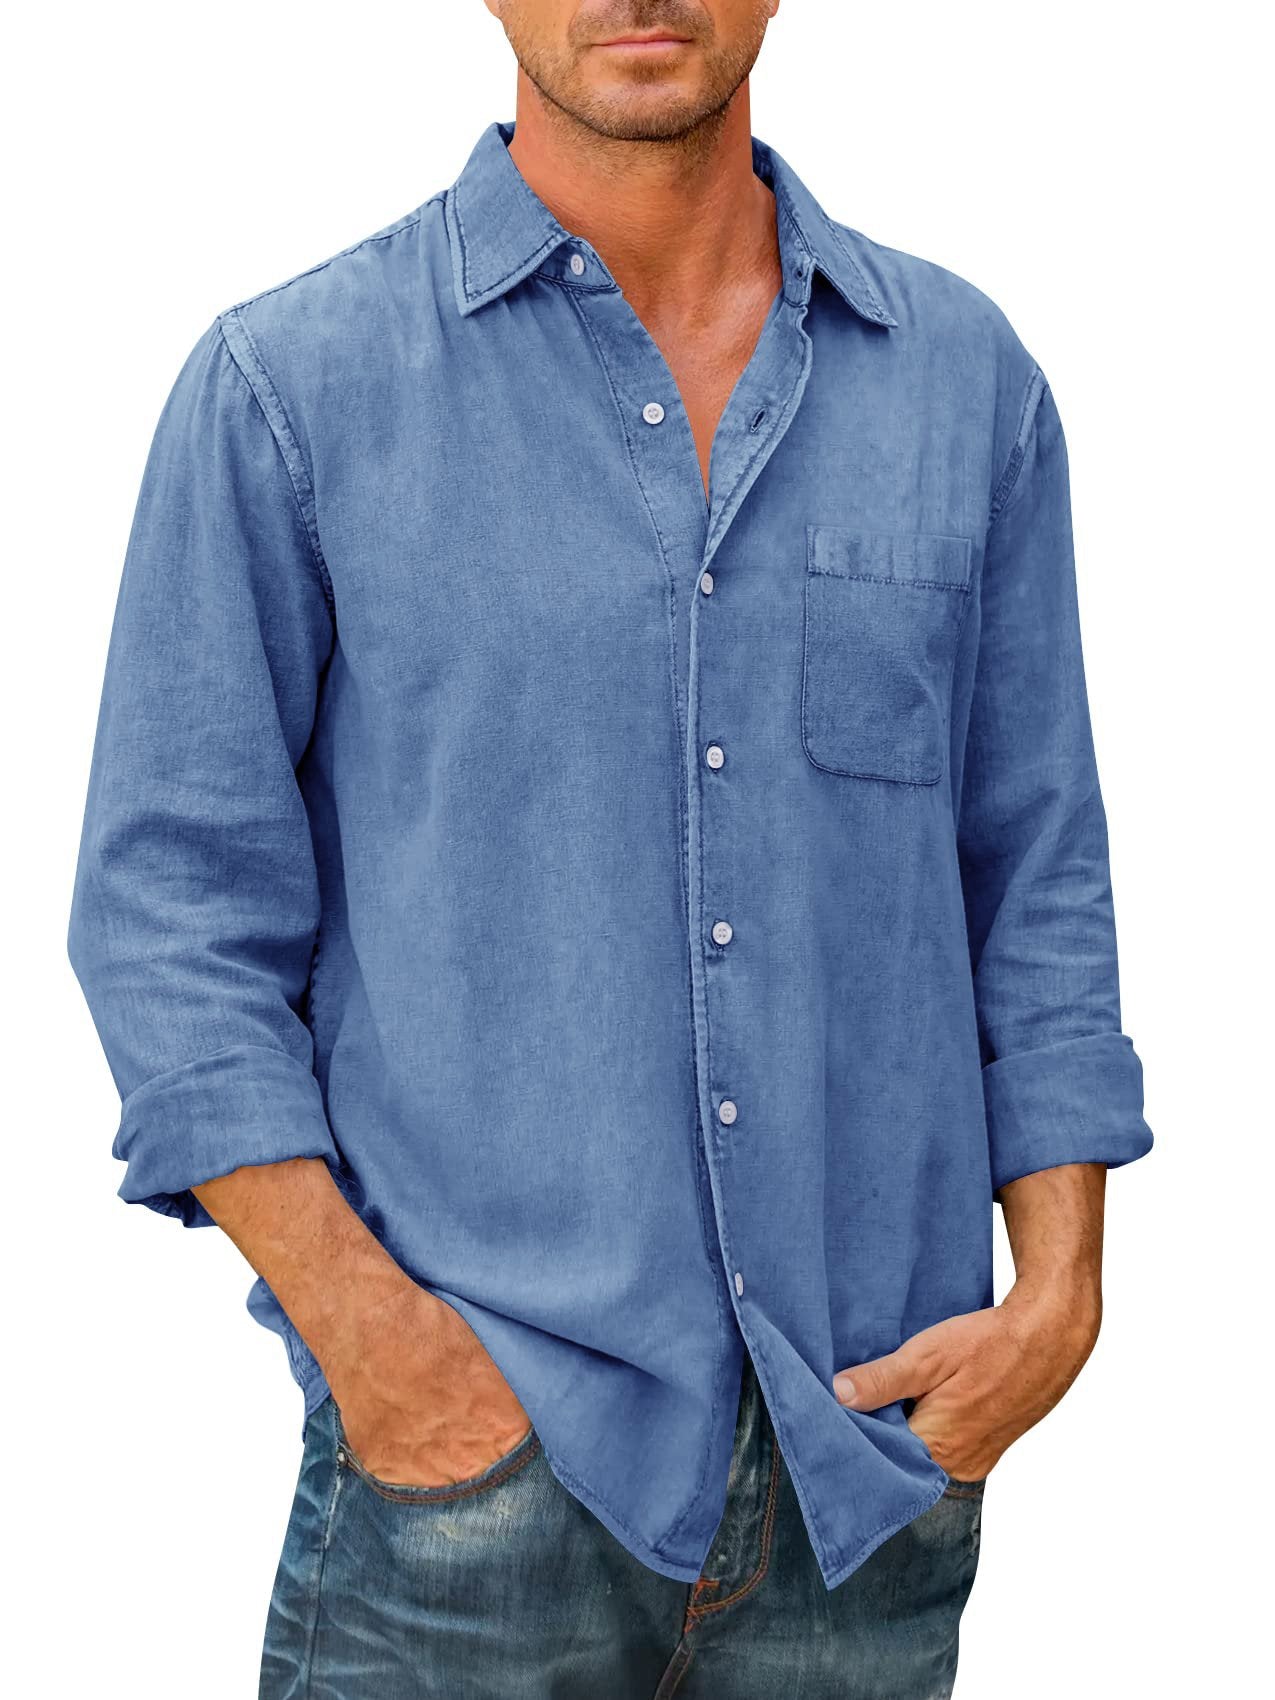 Men's Solid Color Pocket Cotton Long Sleeve Shirt Casual Shirt-Mokaloha